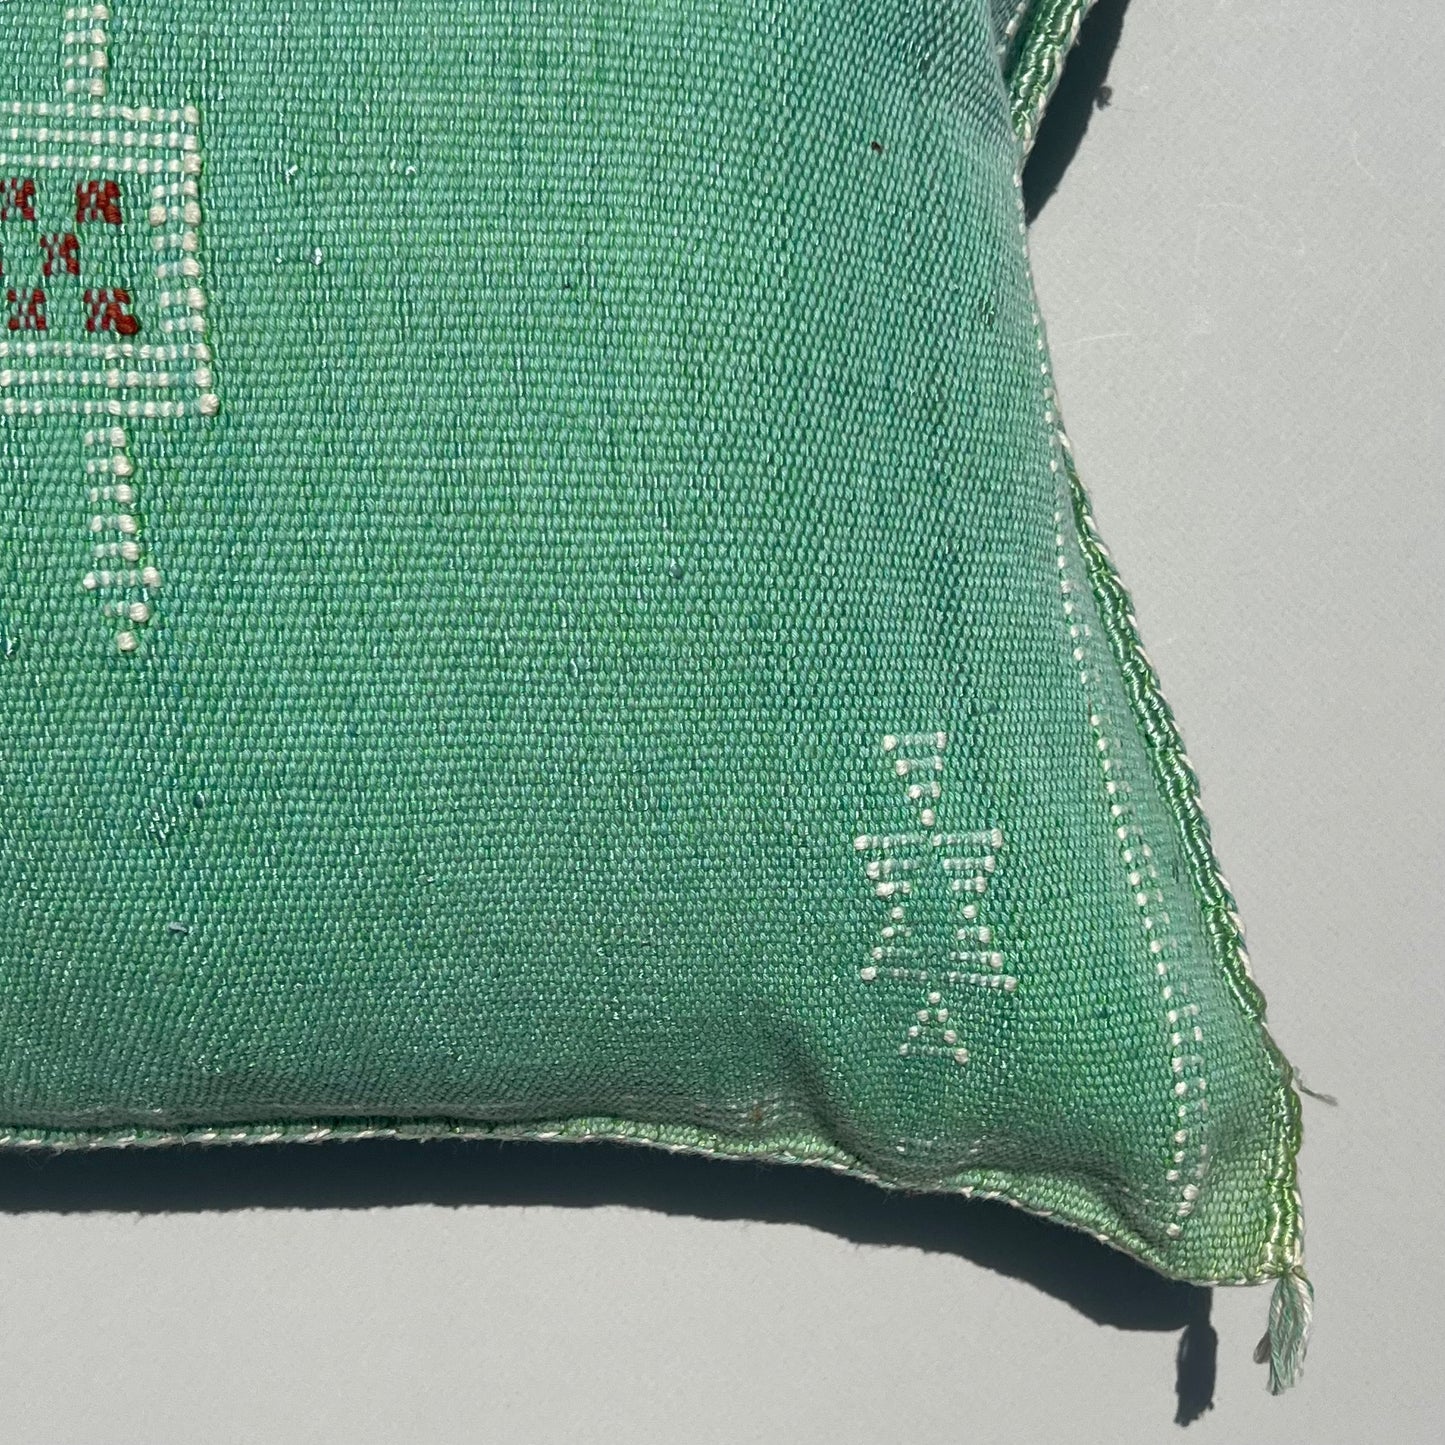 Green Cactus Silk Kilim Pillow